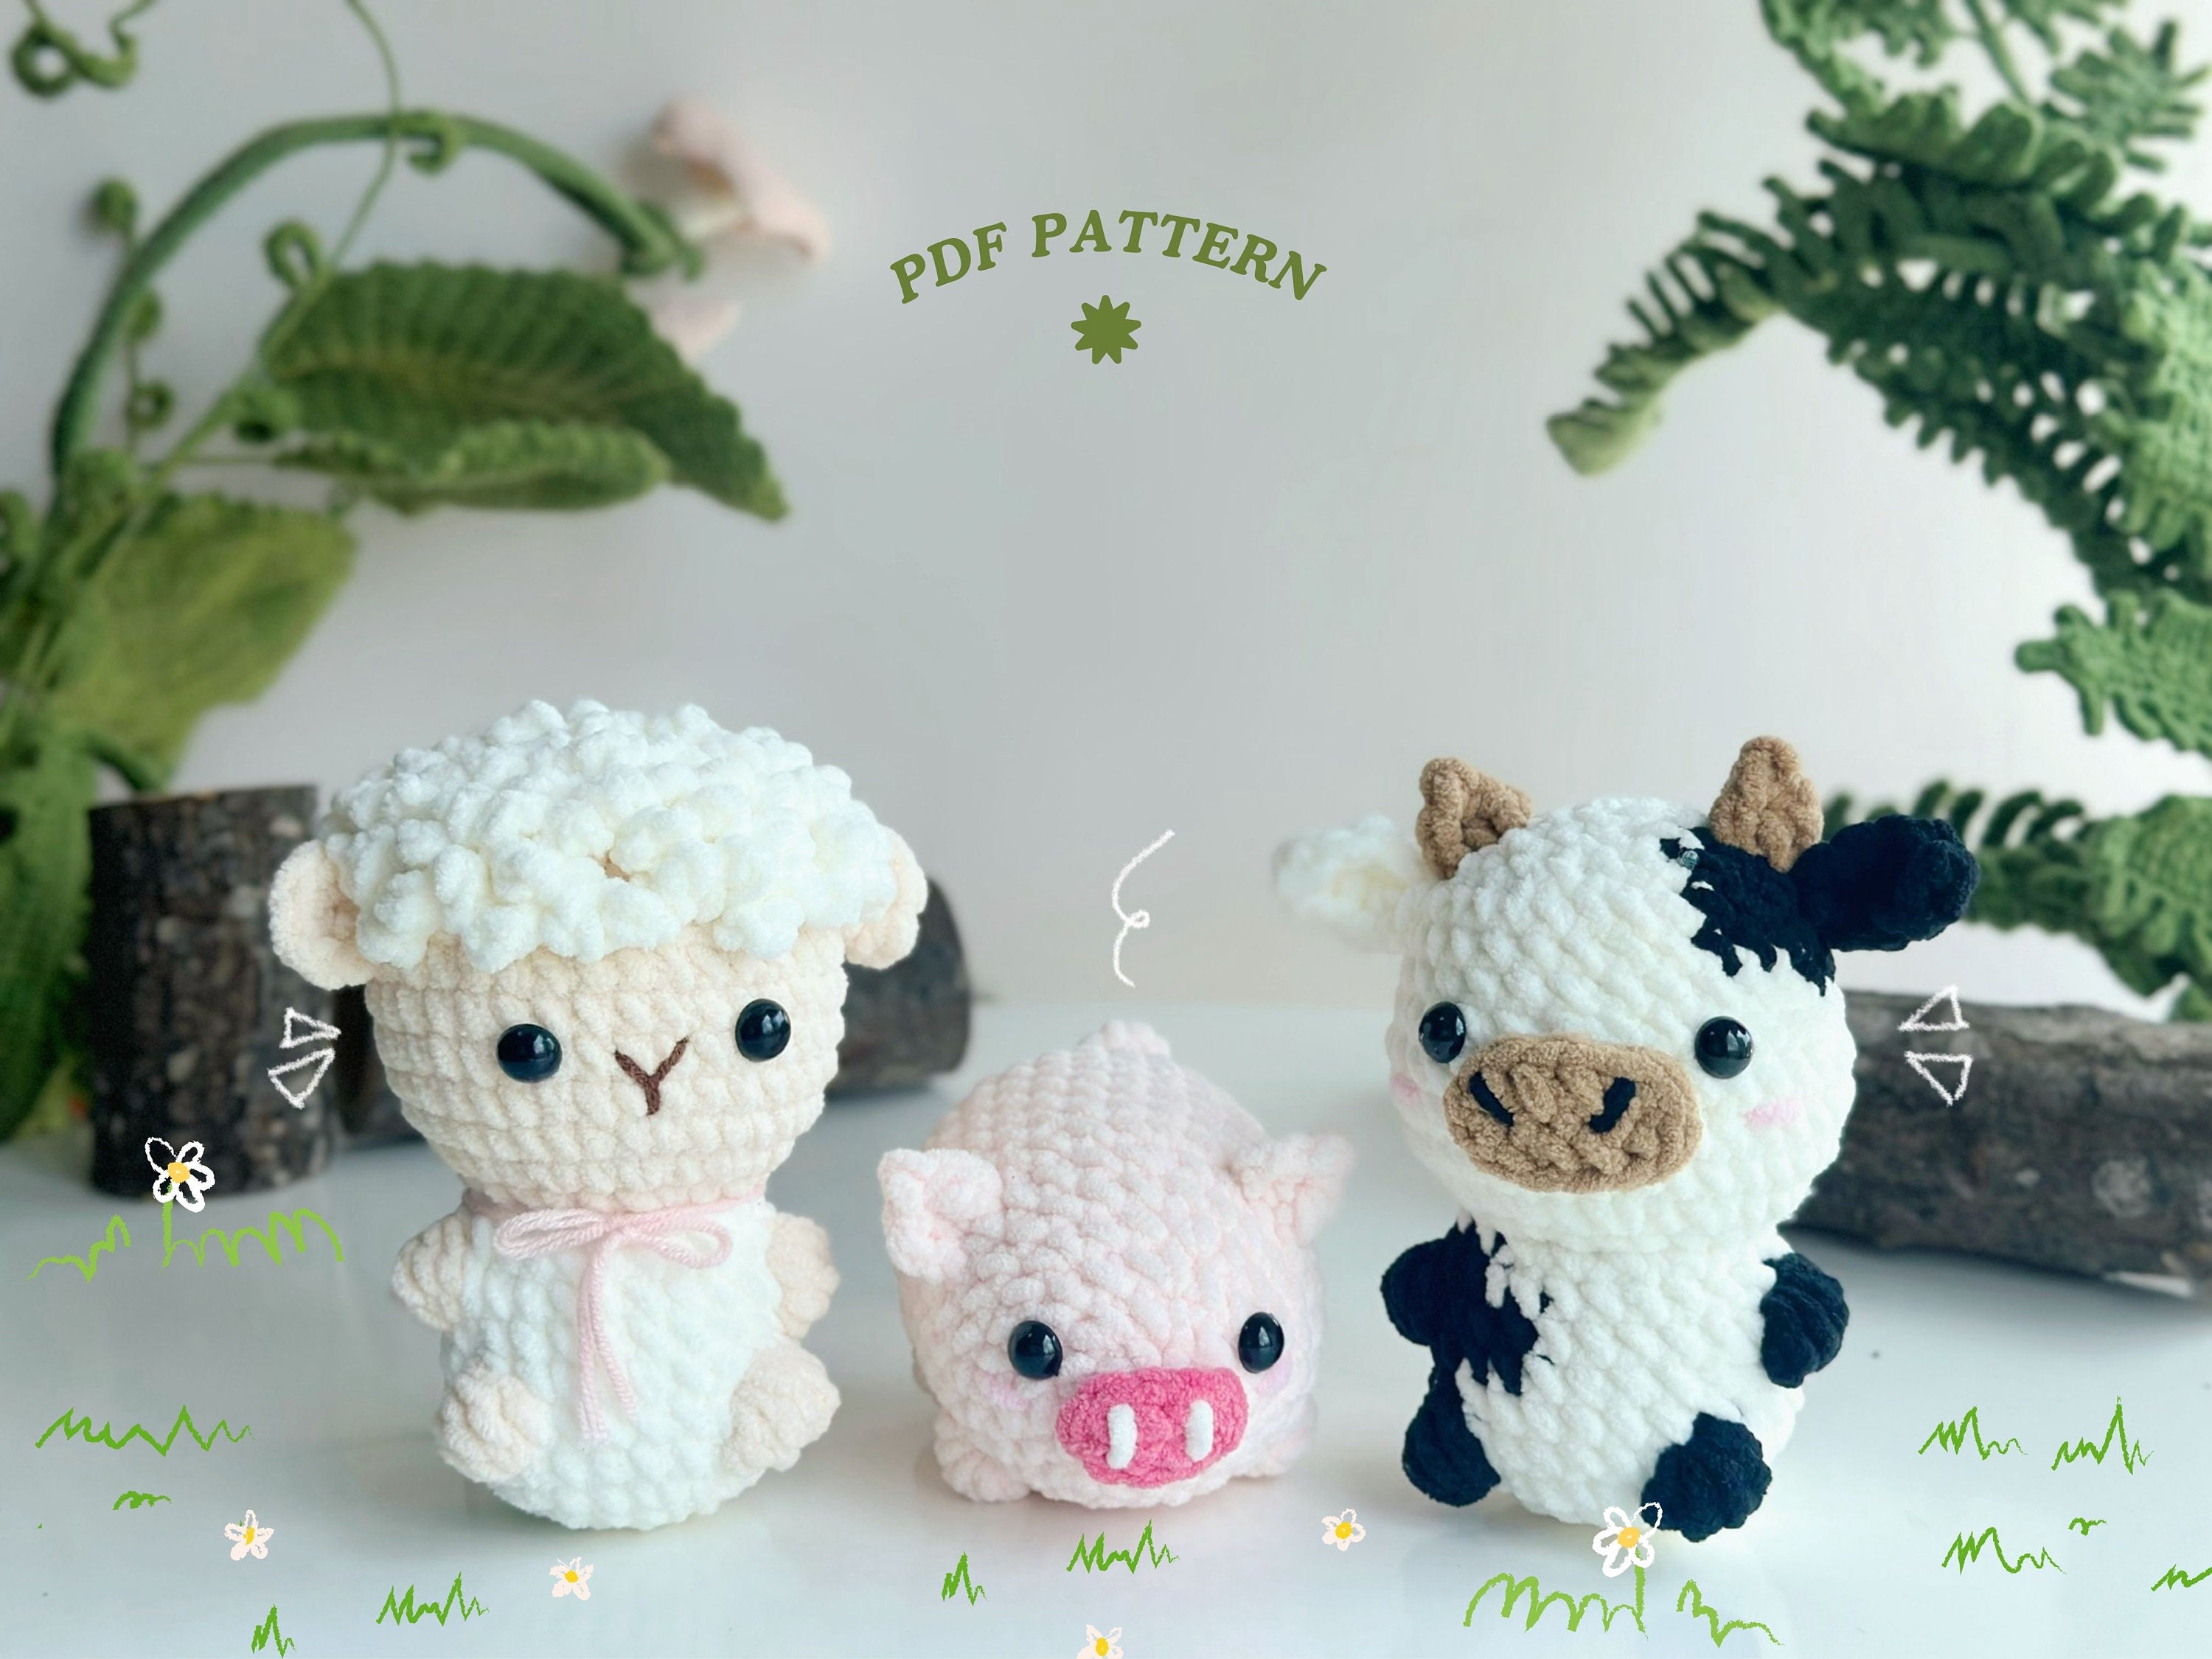 Amigurumi Made Easy: 16 Straightforward Animal Crochet Patterns